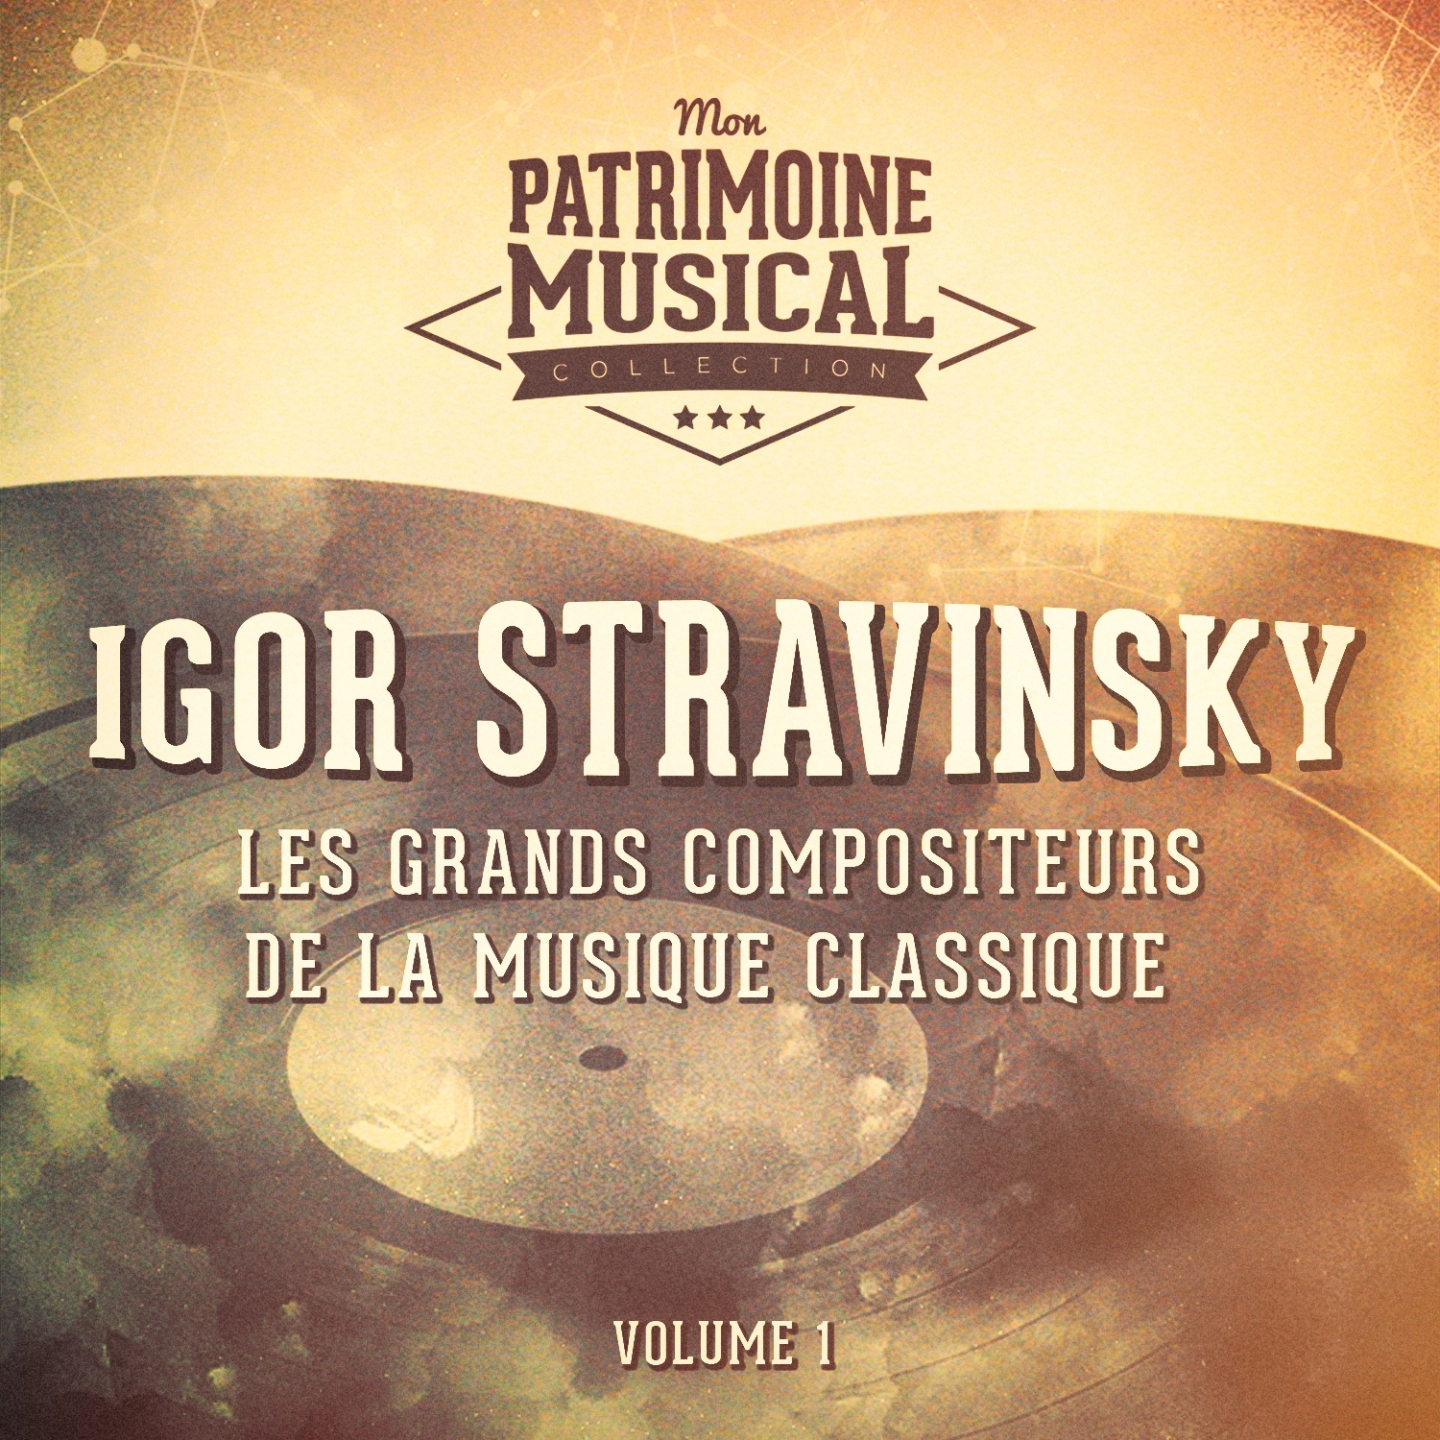 Les grands compositeurs de la musique classique : igor stravinsky, vol. 1